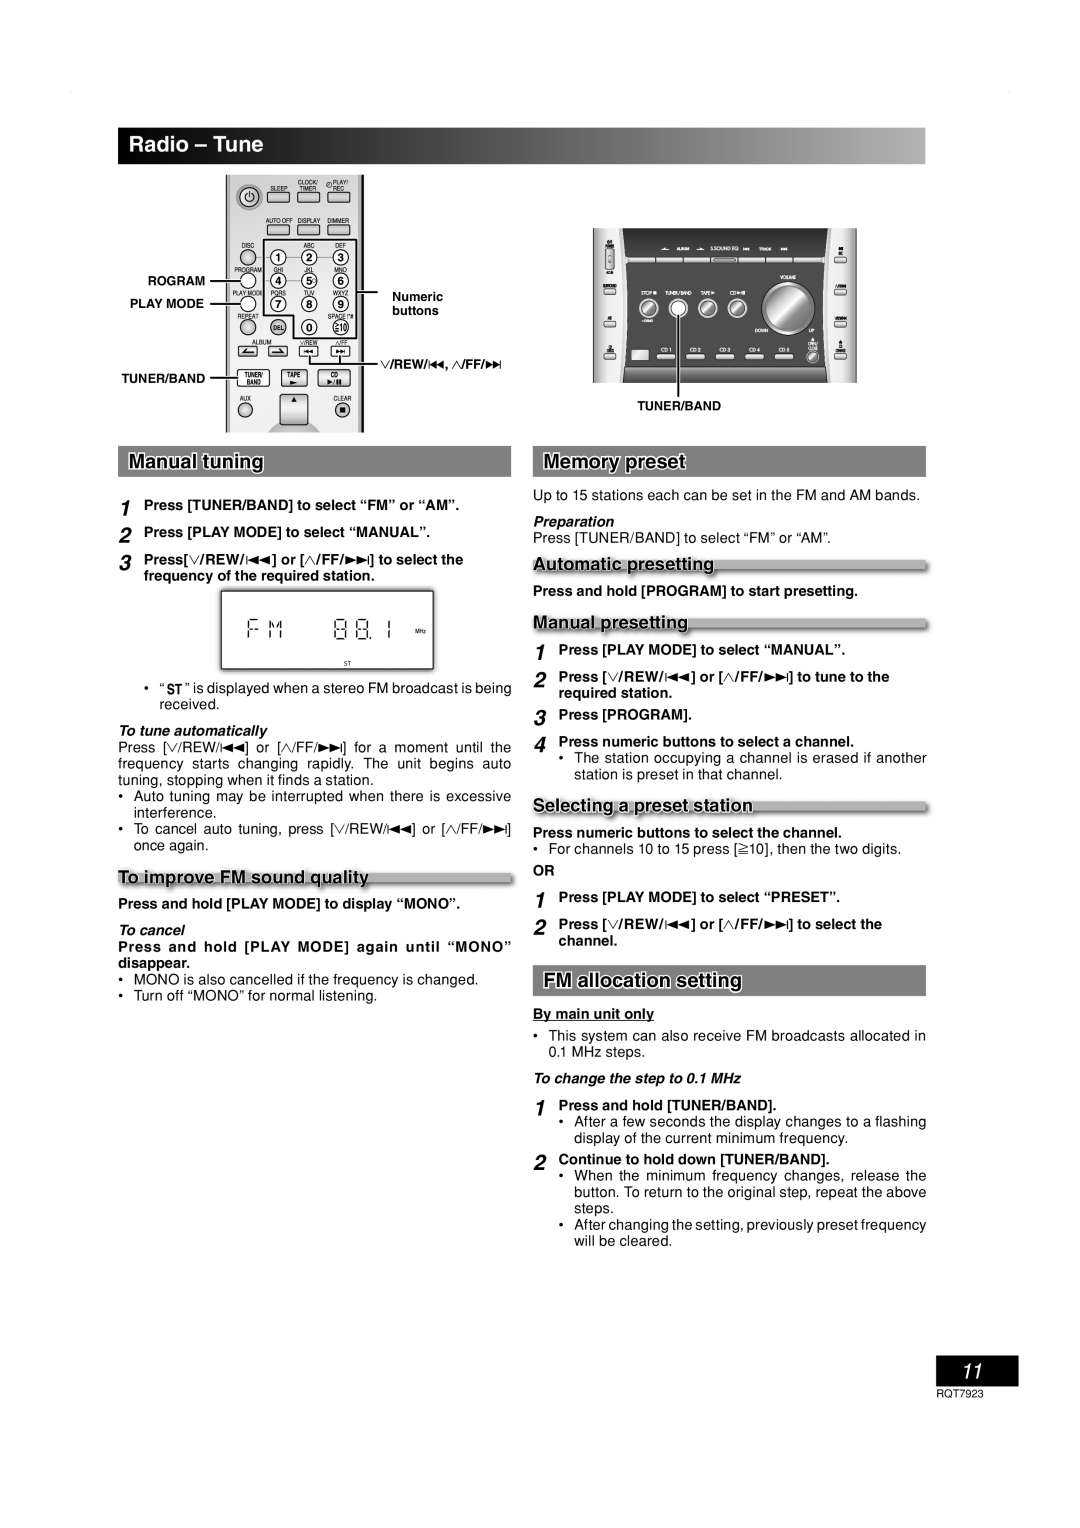 Panasonic SC-PM313 Radio - Tune, Manual tuning, Memory preset, FM allocation setting, To improve FM sound quality 